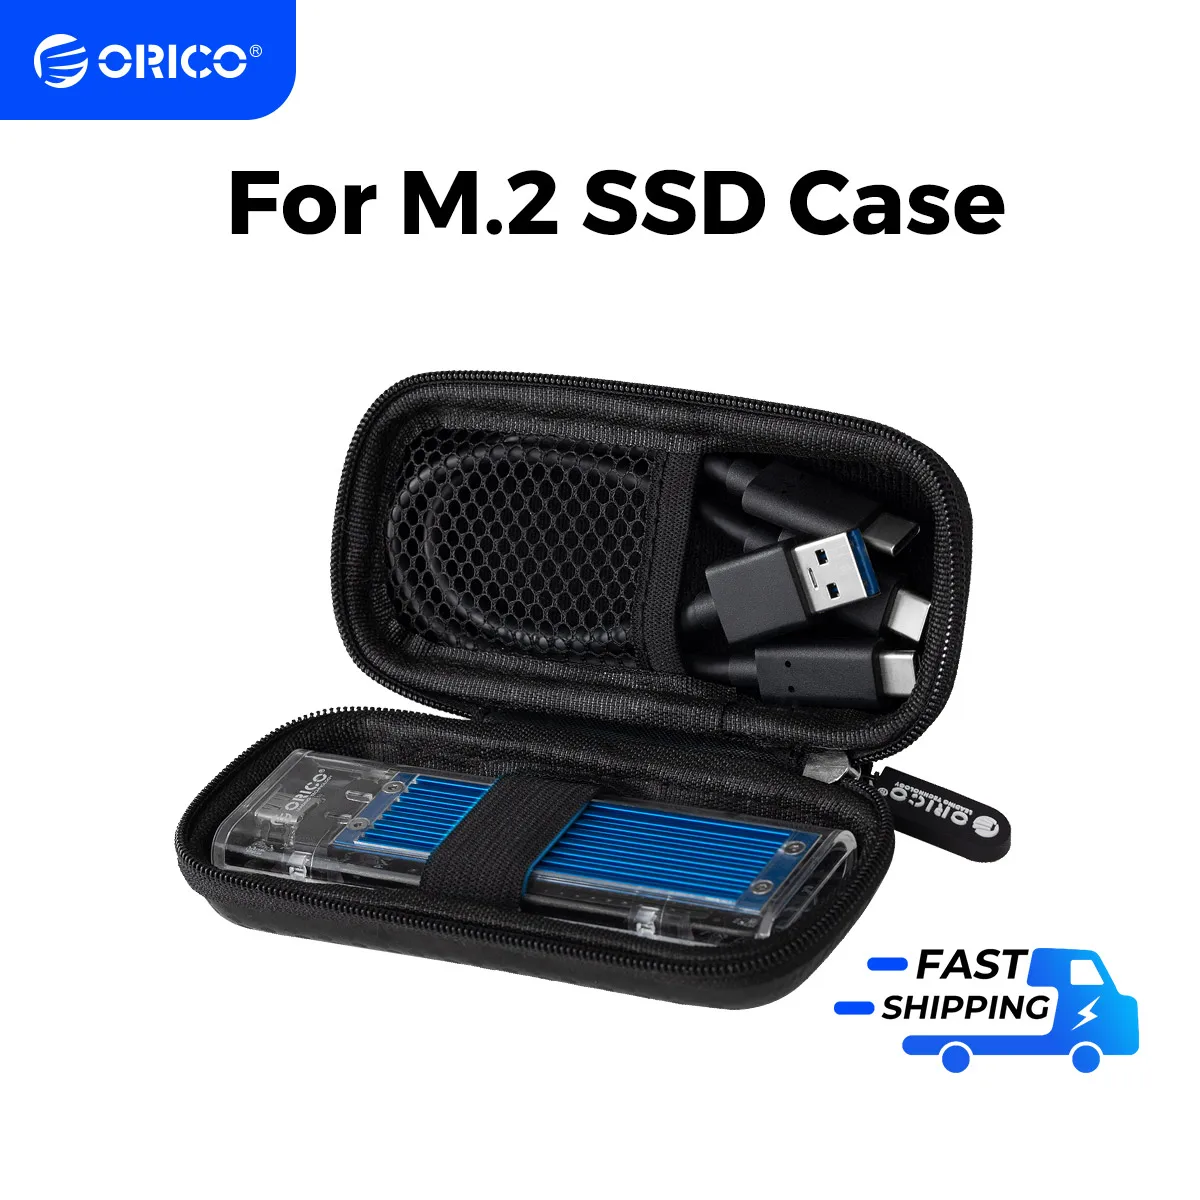 ORICO EVA Portable External M.2 Hard Drive Storage Protection Bag /Box External HDD Case For M.2 Hard Drive Enclosure Black